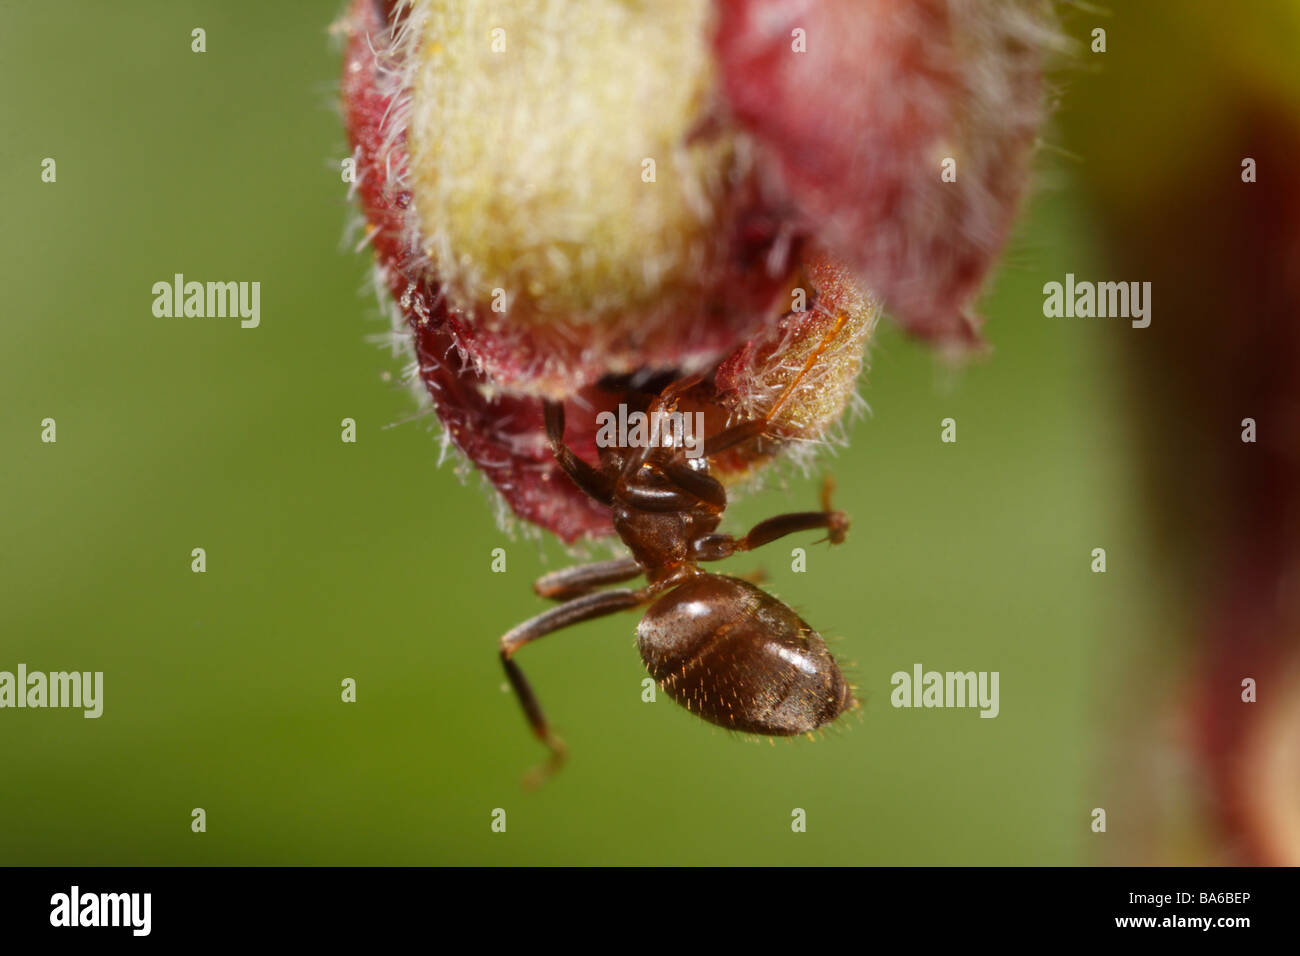 Hormiga alimentándose de una flor de uchuva (Lasius Níger, hormiga negra de jardín) Foto de stock